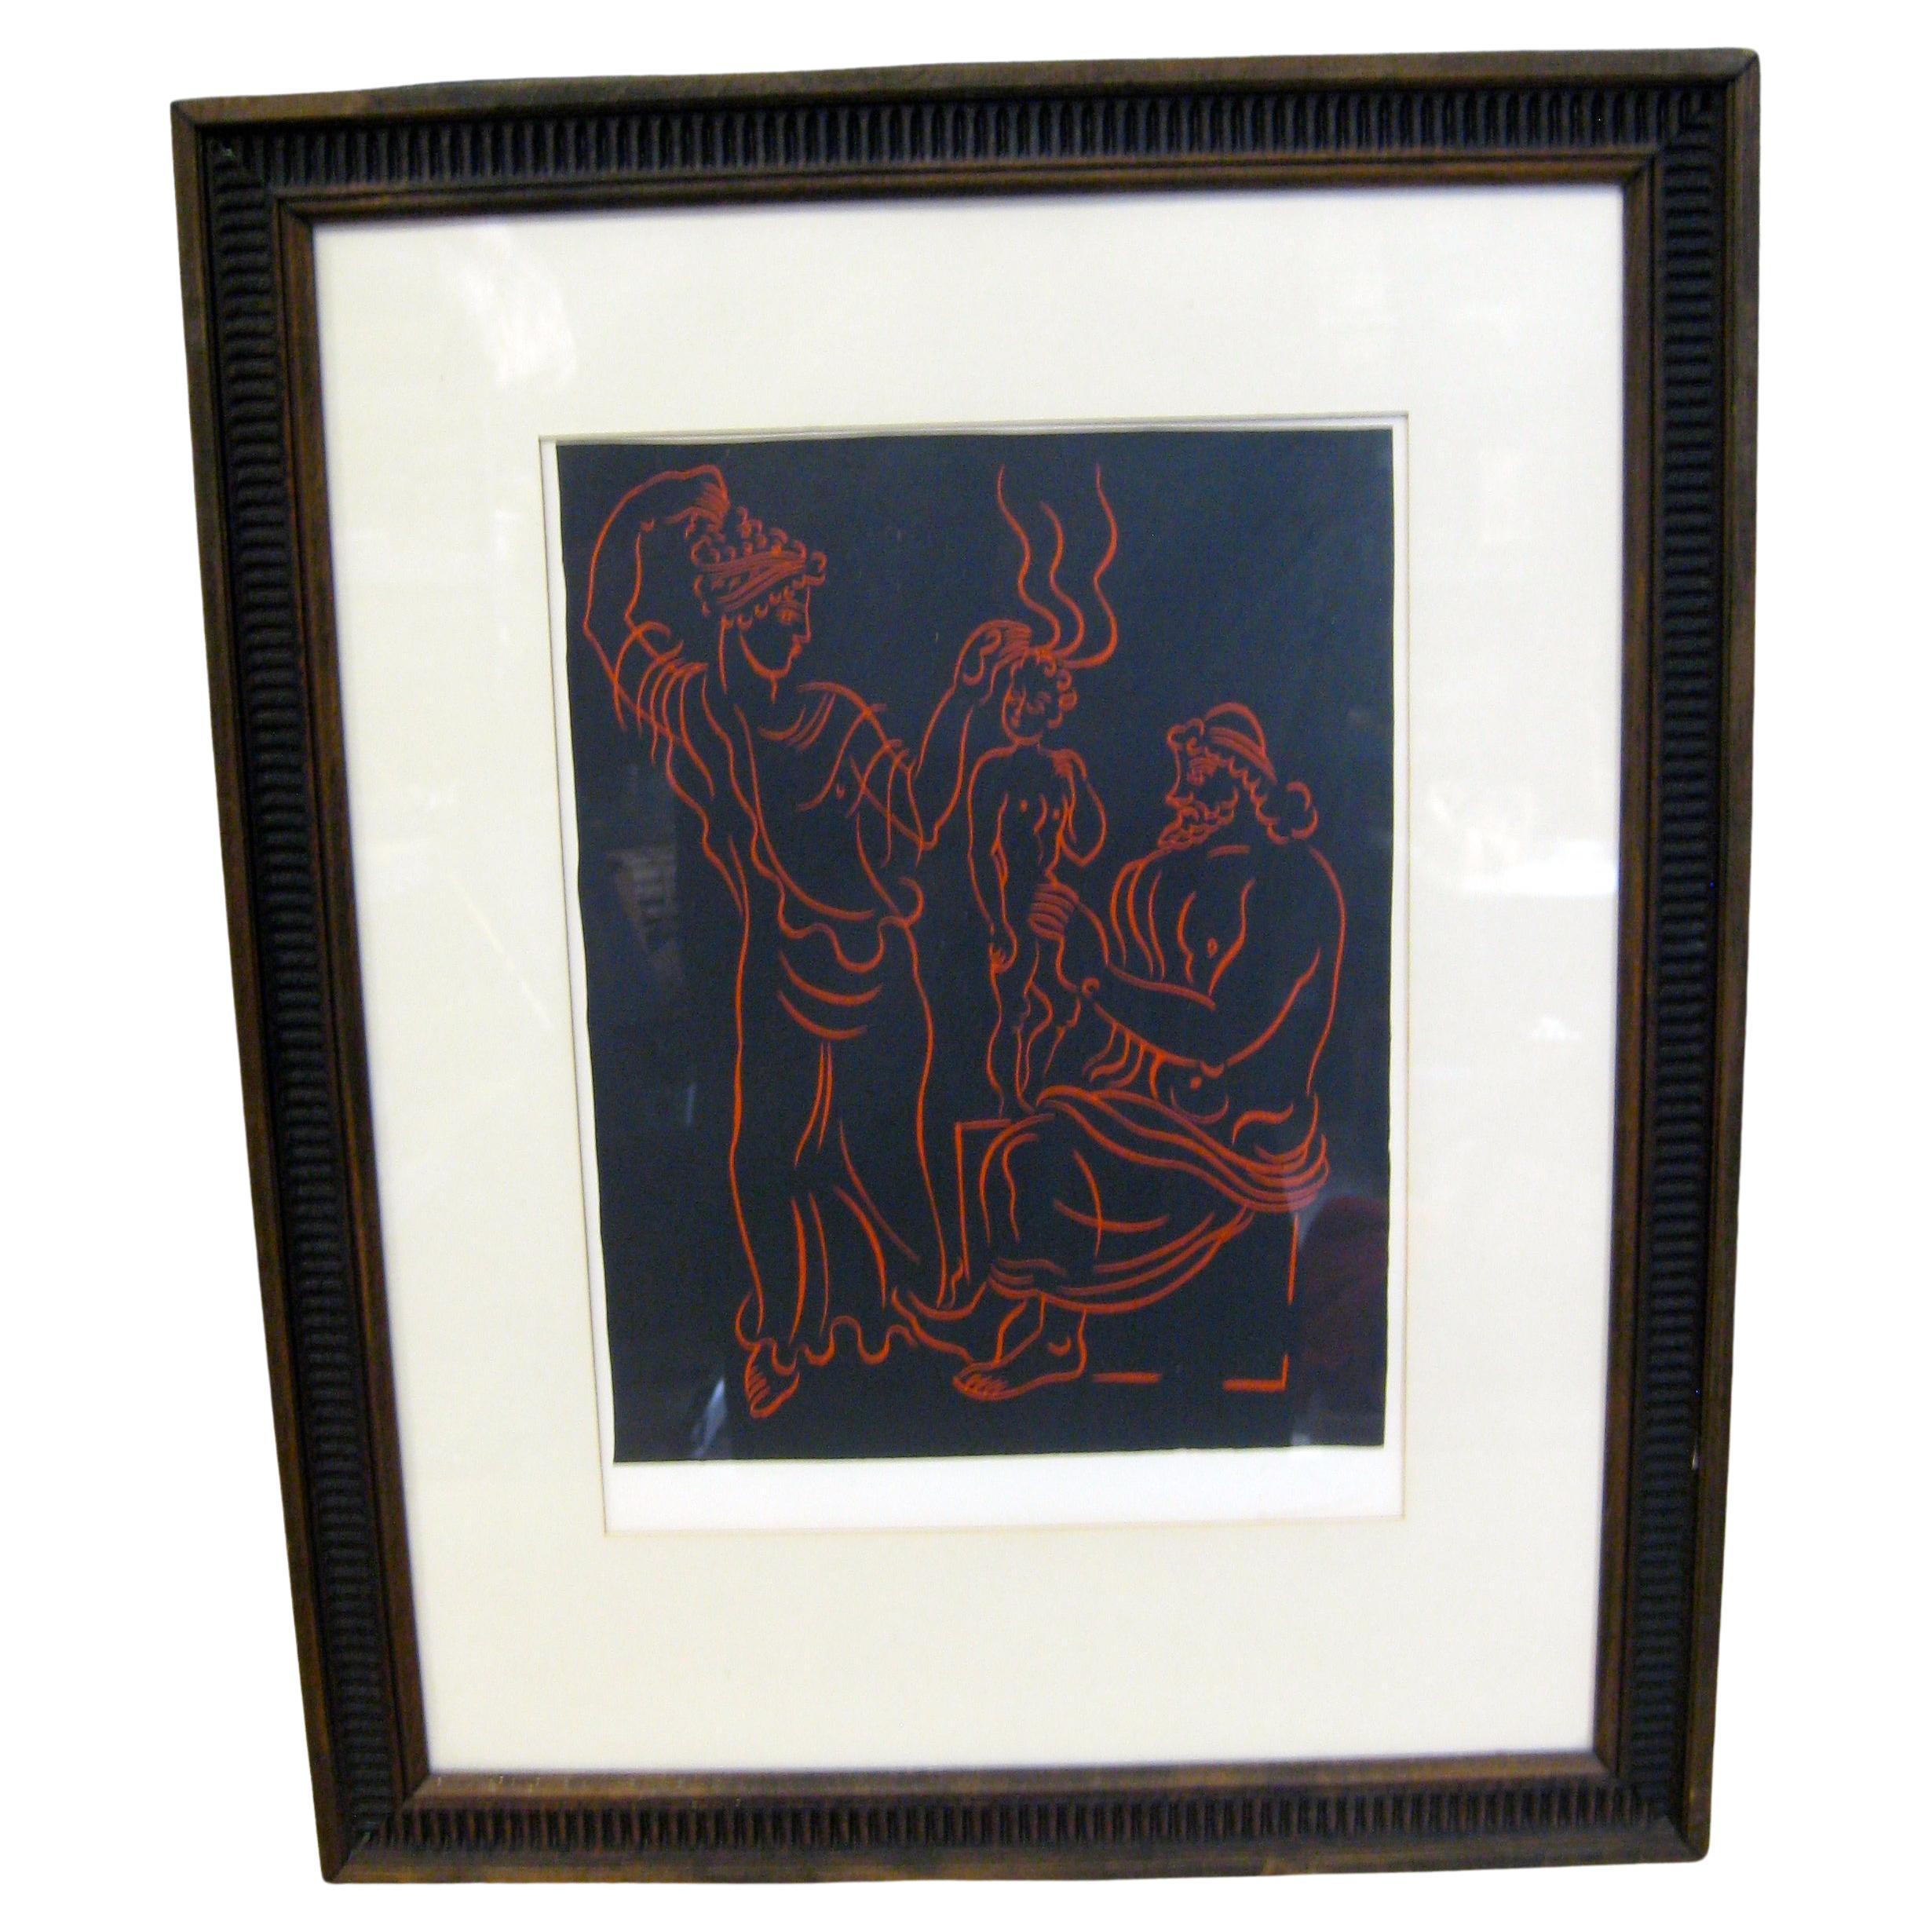 Andre Derain "L'enfant" Original Lithograph Print Framed French Artist For Sale